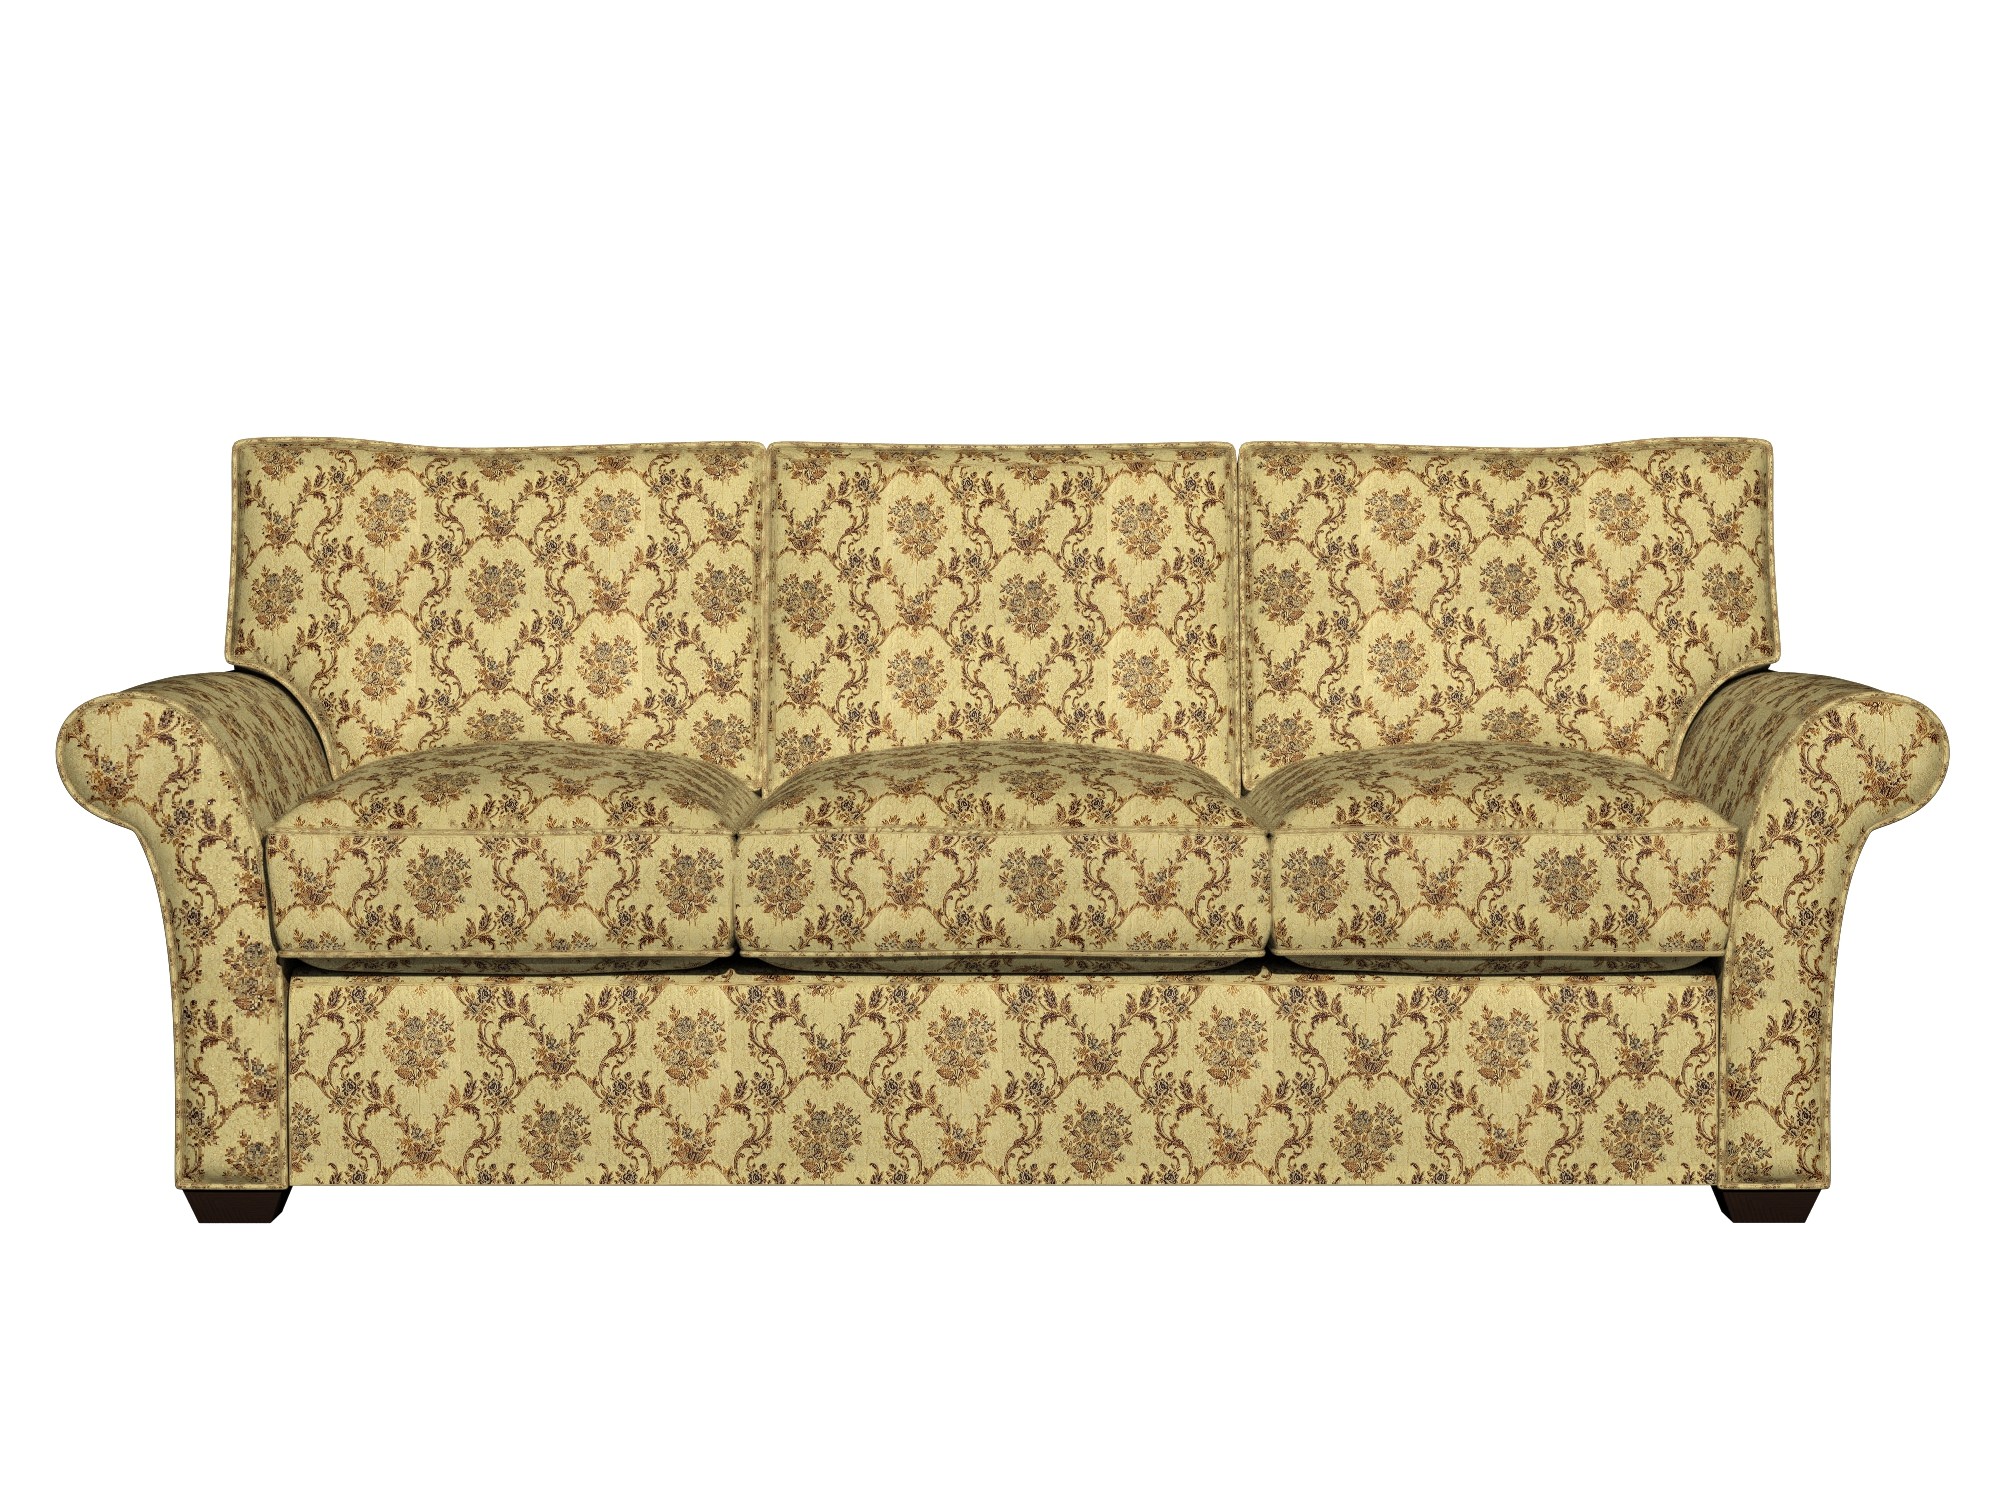 IVORY BEIGE GOLD Metallic Floral Brocade Upholstery Drapery Fabric (11 –  handtfabrics